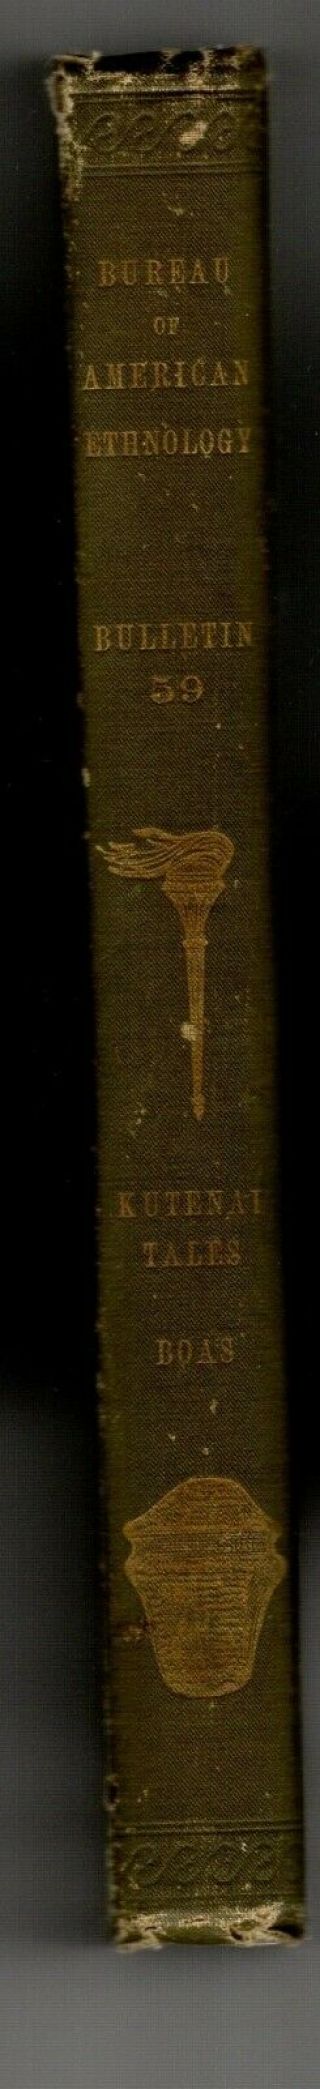 Kutenai Tales By Franz Boas,  Bur Amer Ethnology,  American Indian Stories,  1918